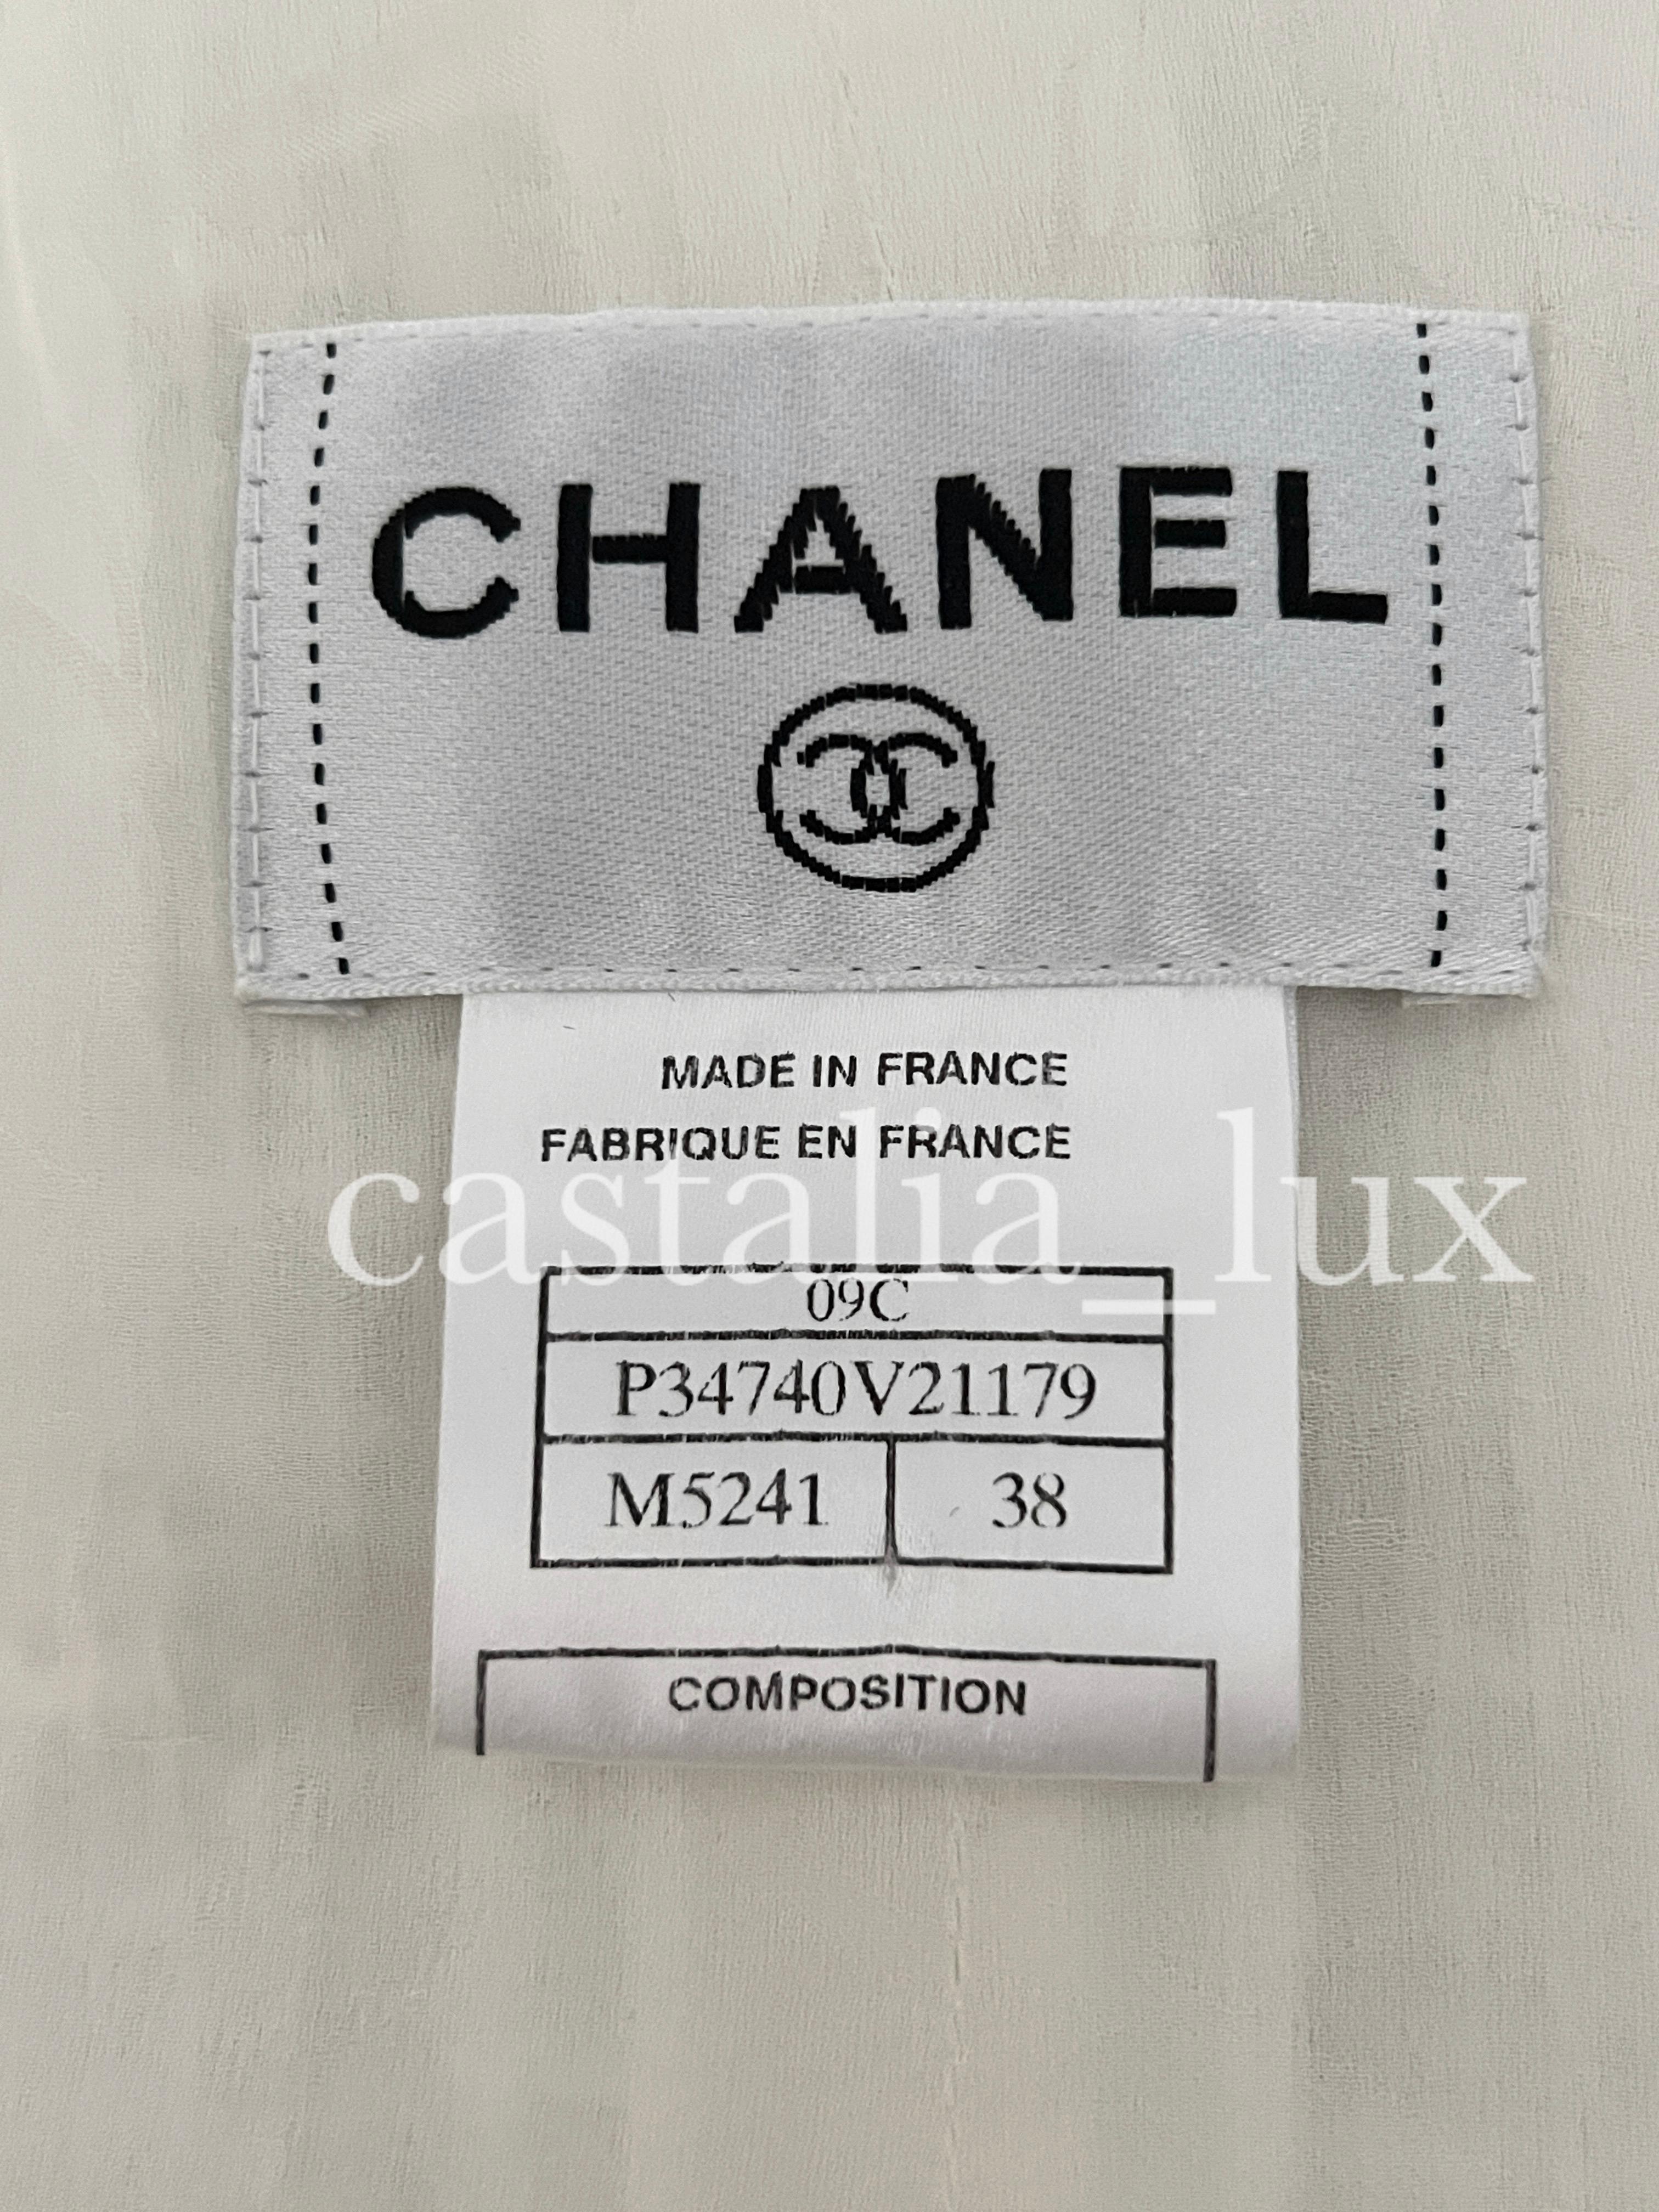 Chanel Claudia Schiffer Paris / Miami Iconic Dress 14